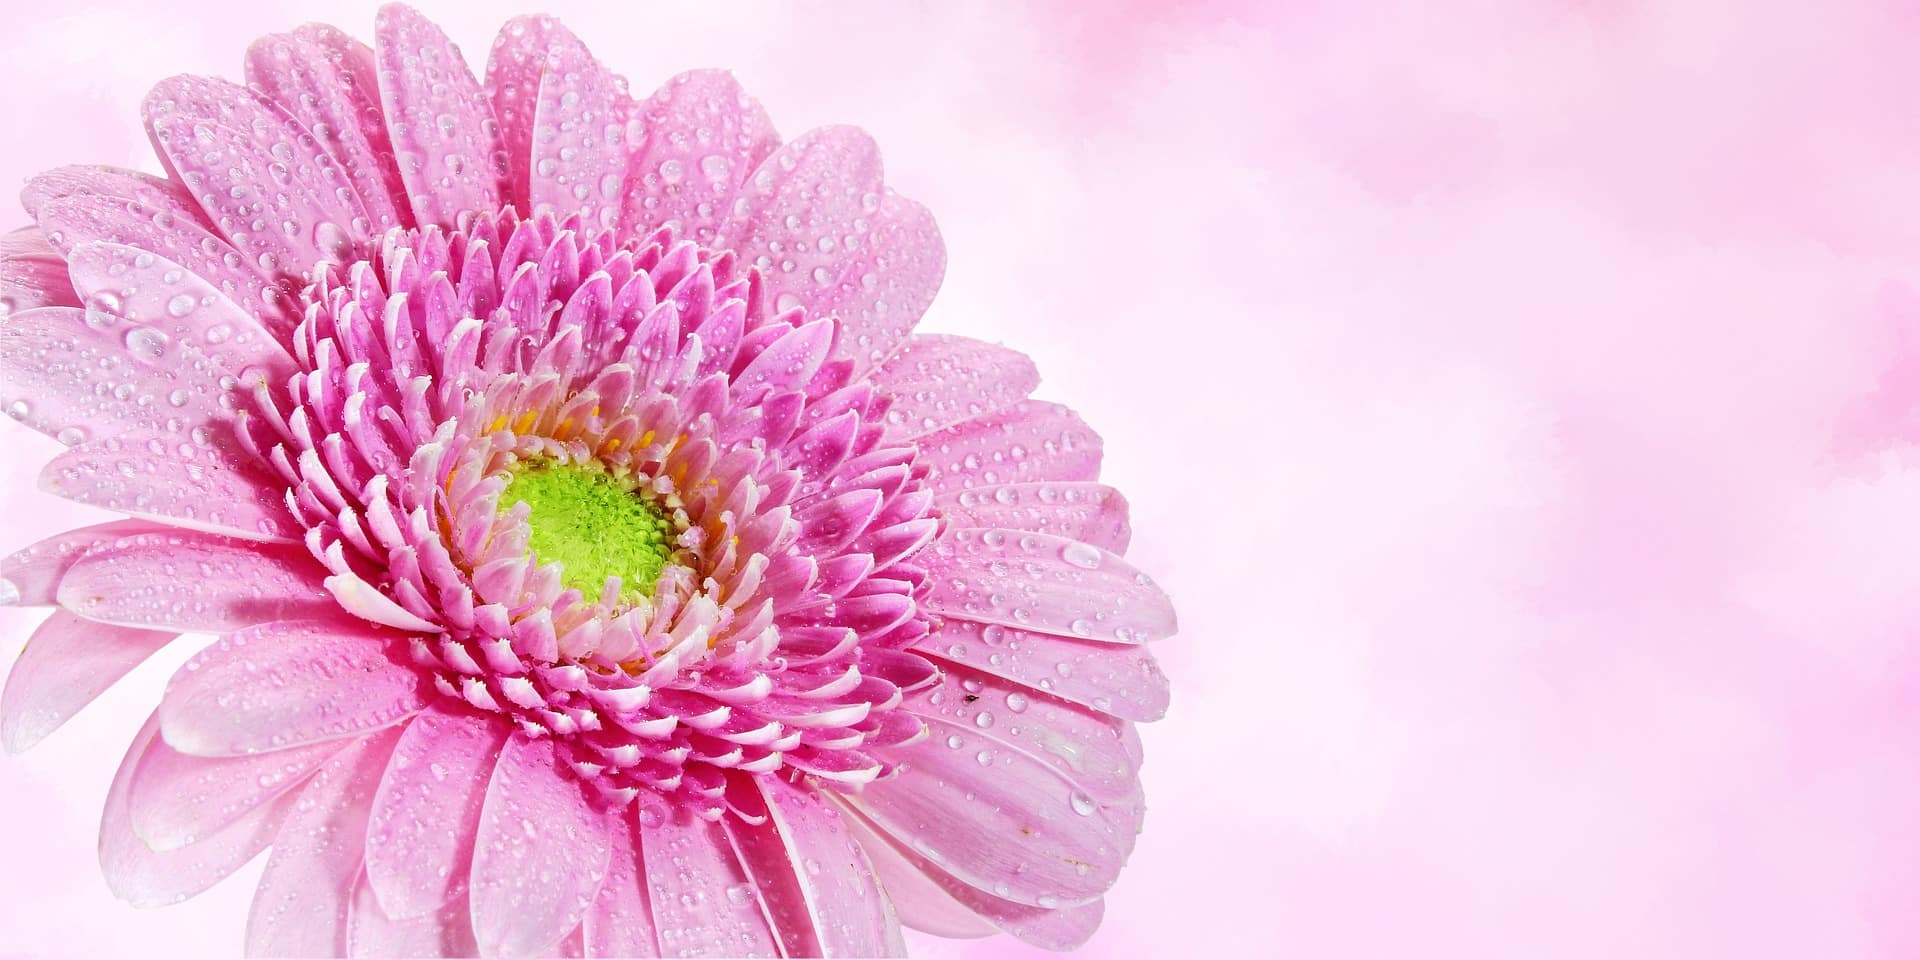 misted flower on pink